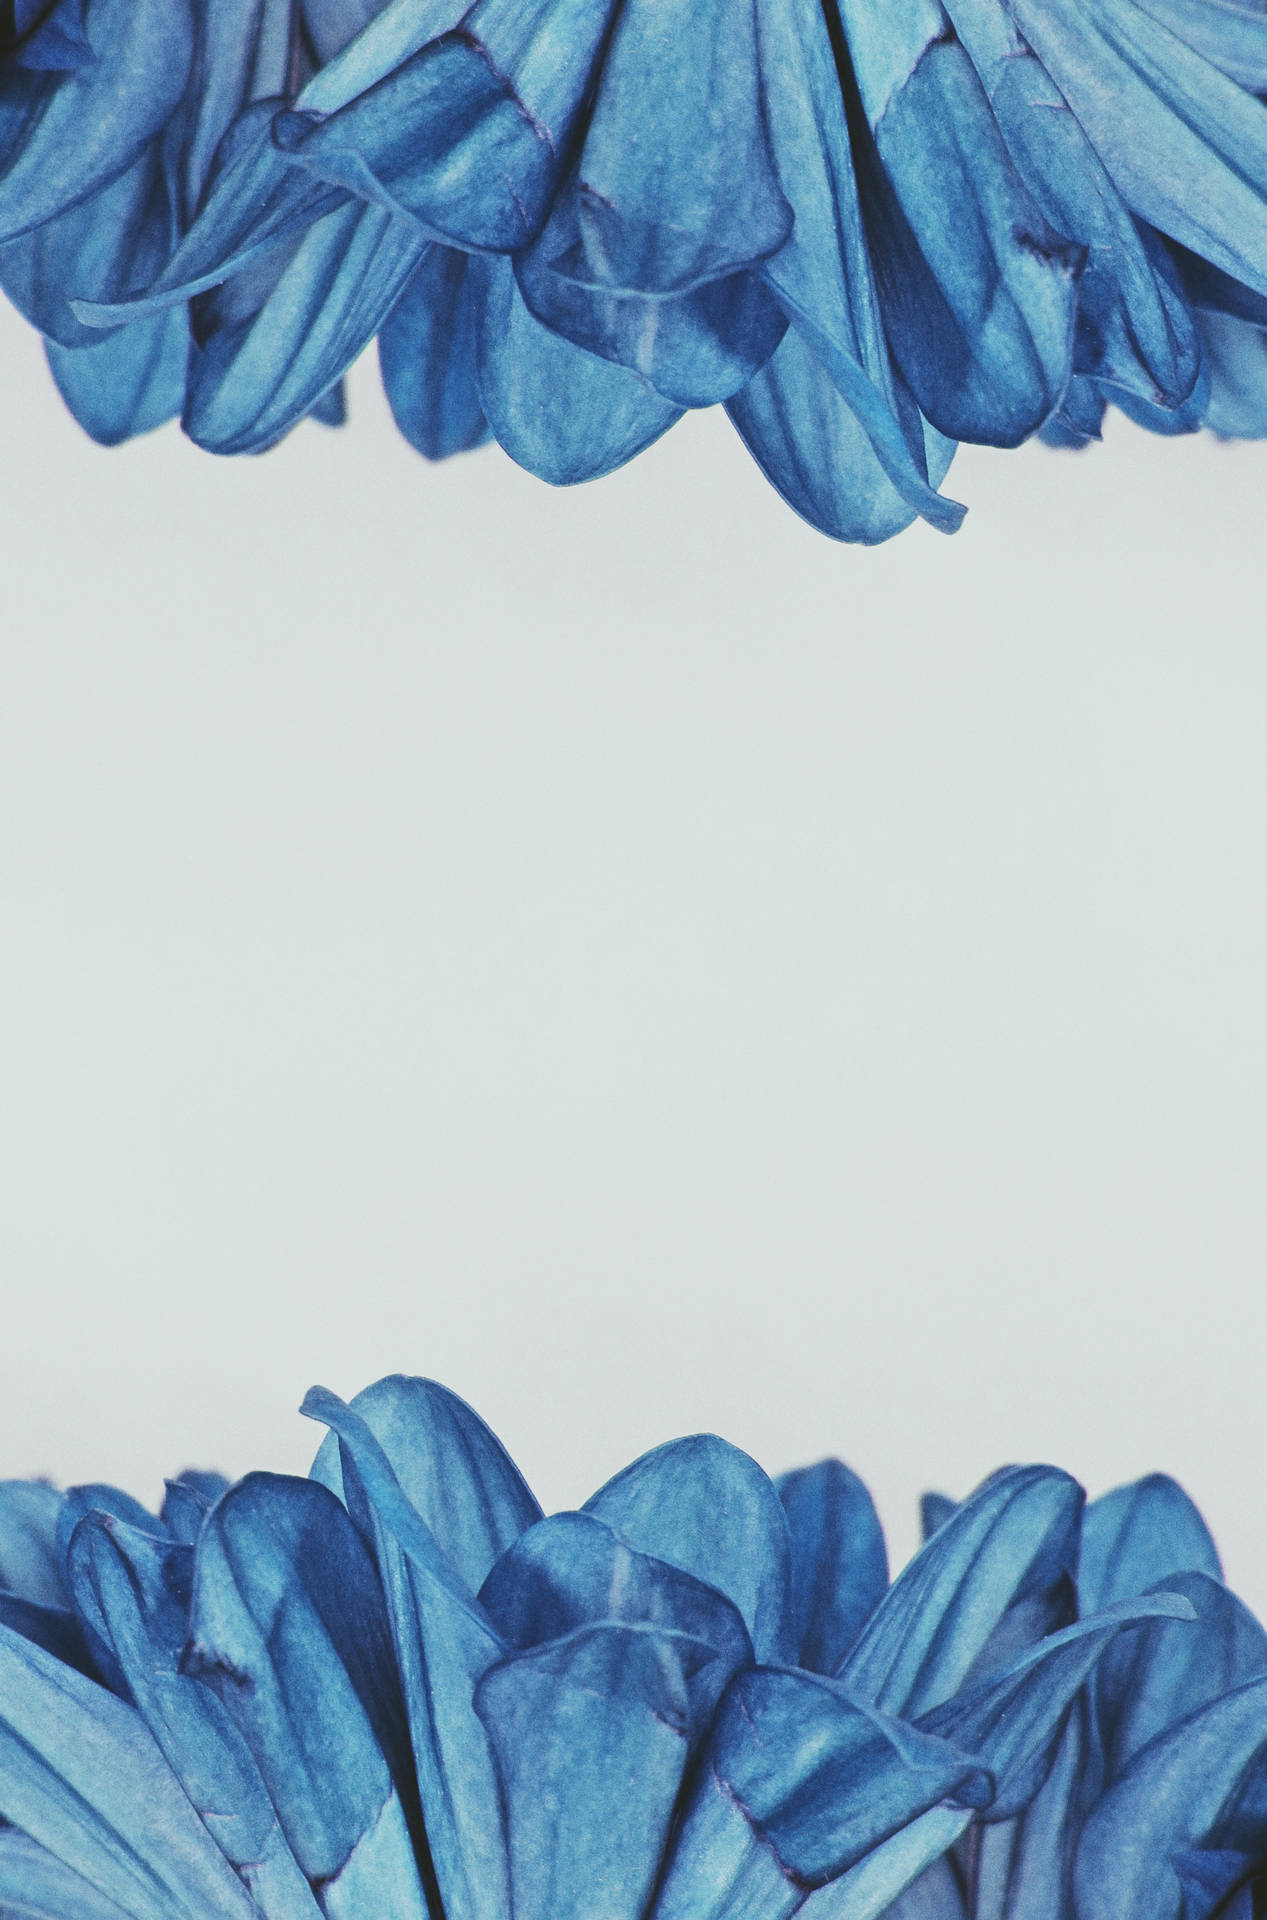 Caption: Splendid Blooming Blue Flowers Background Wallpaper